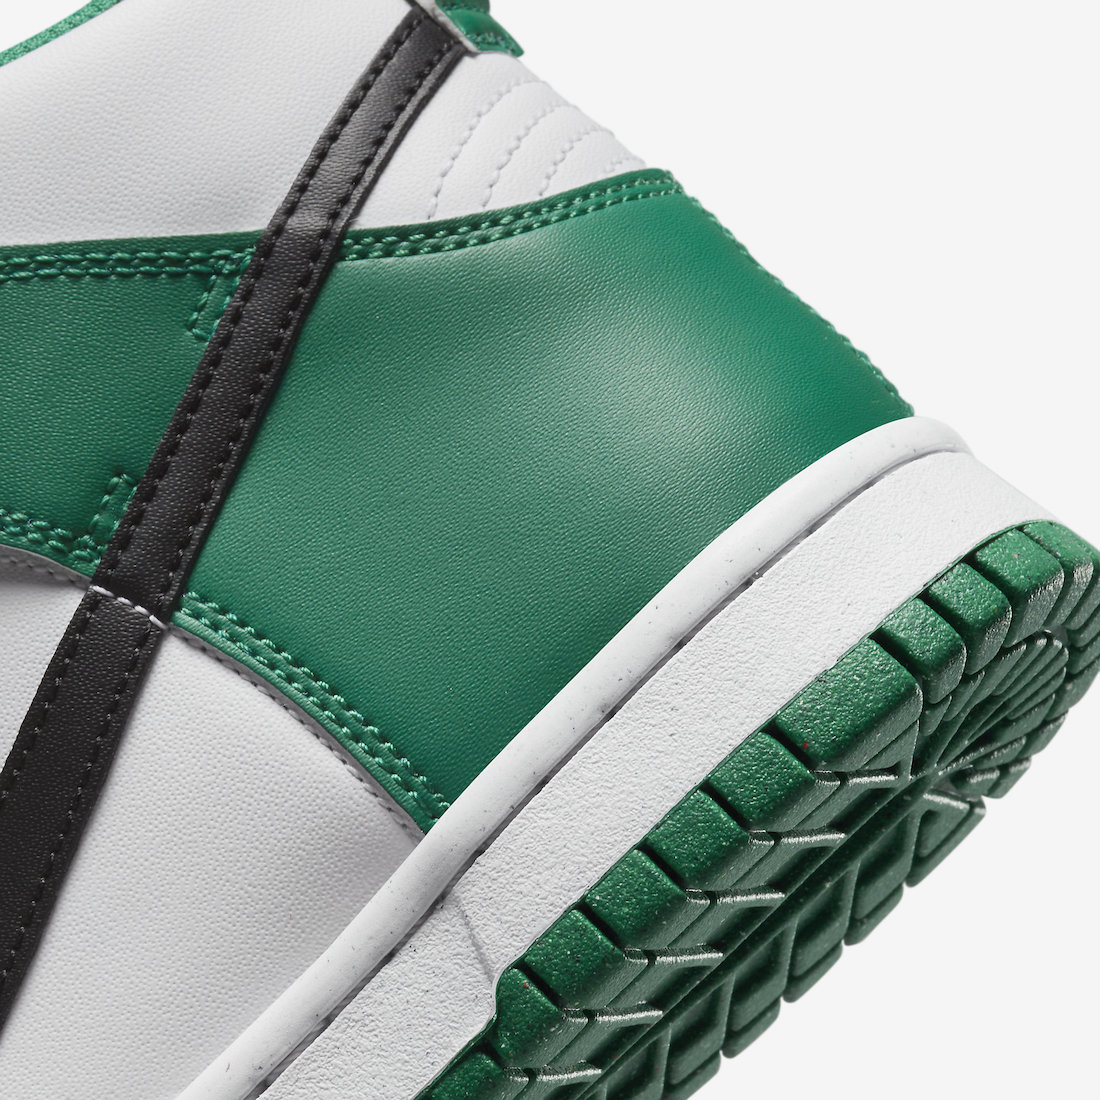 Nike Dunk High GS Celtics DR0527-300 Release Date Info | SneakerFiles